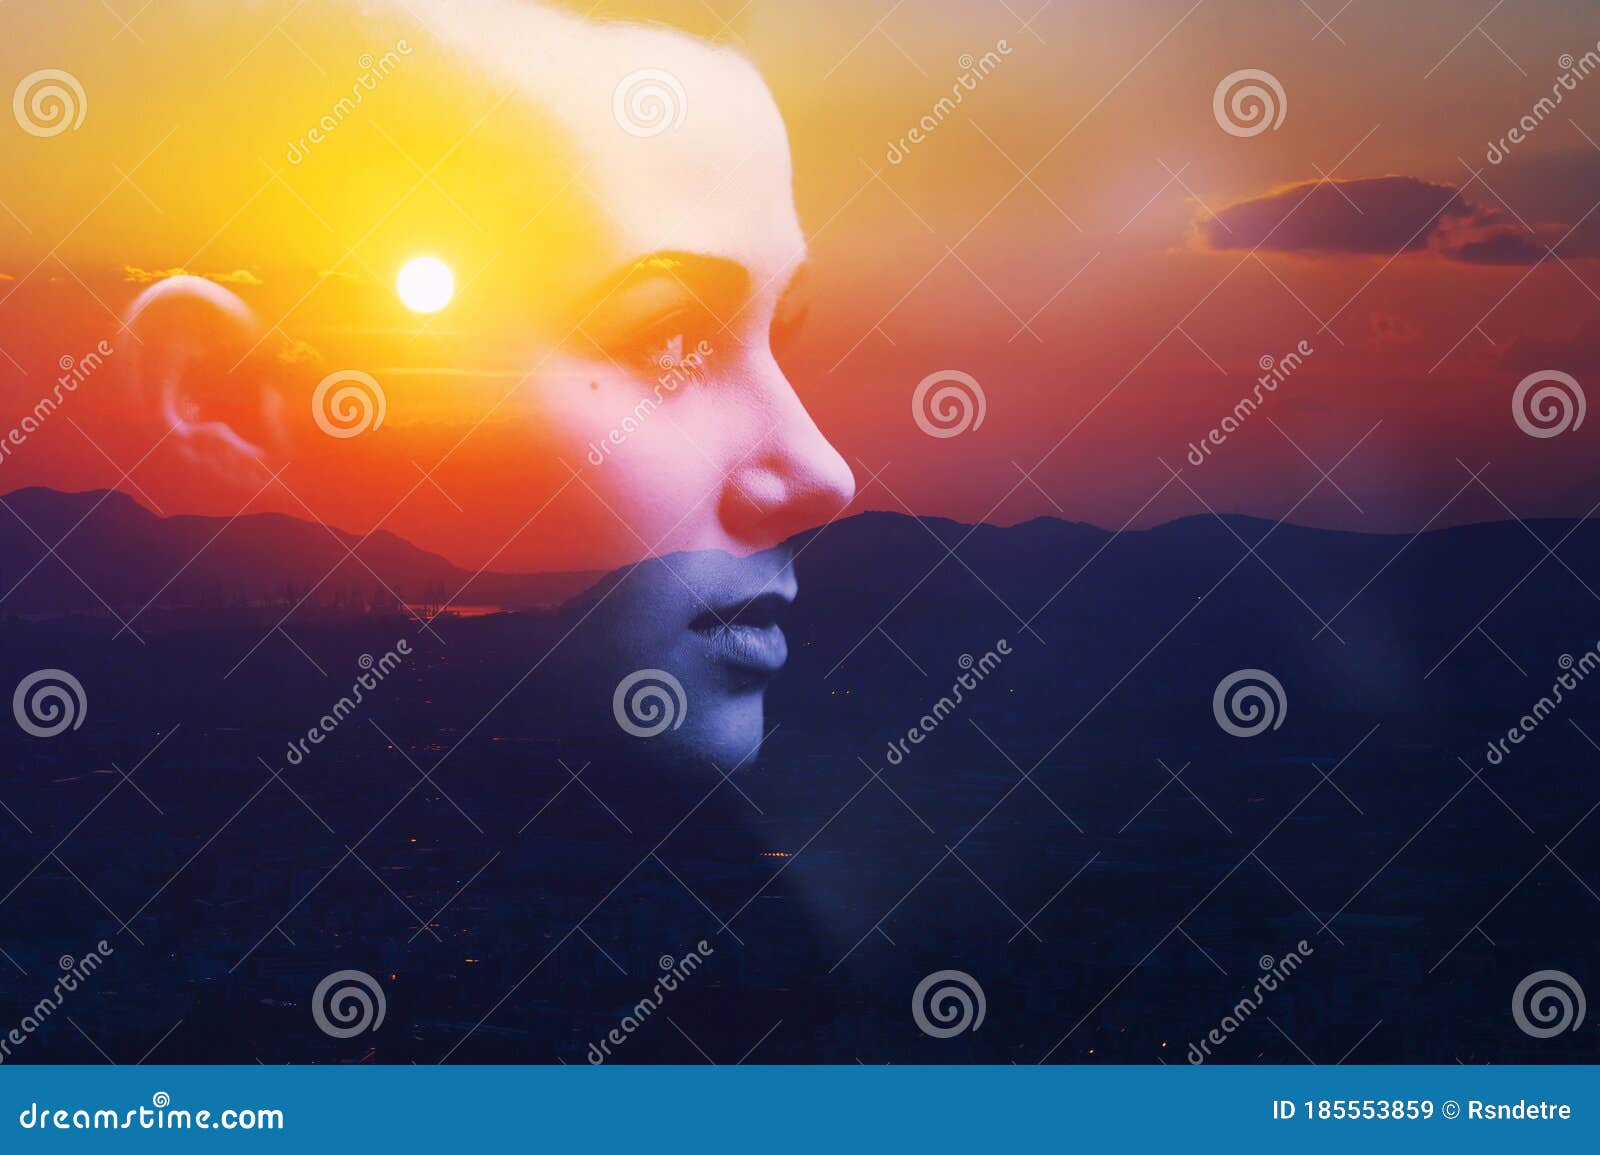 psychology power of mind, human spirit, mental health, zen concept. double exposure abstract portrait woman face silhouette sunset